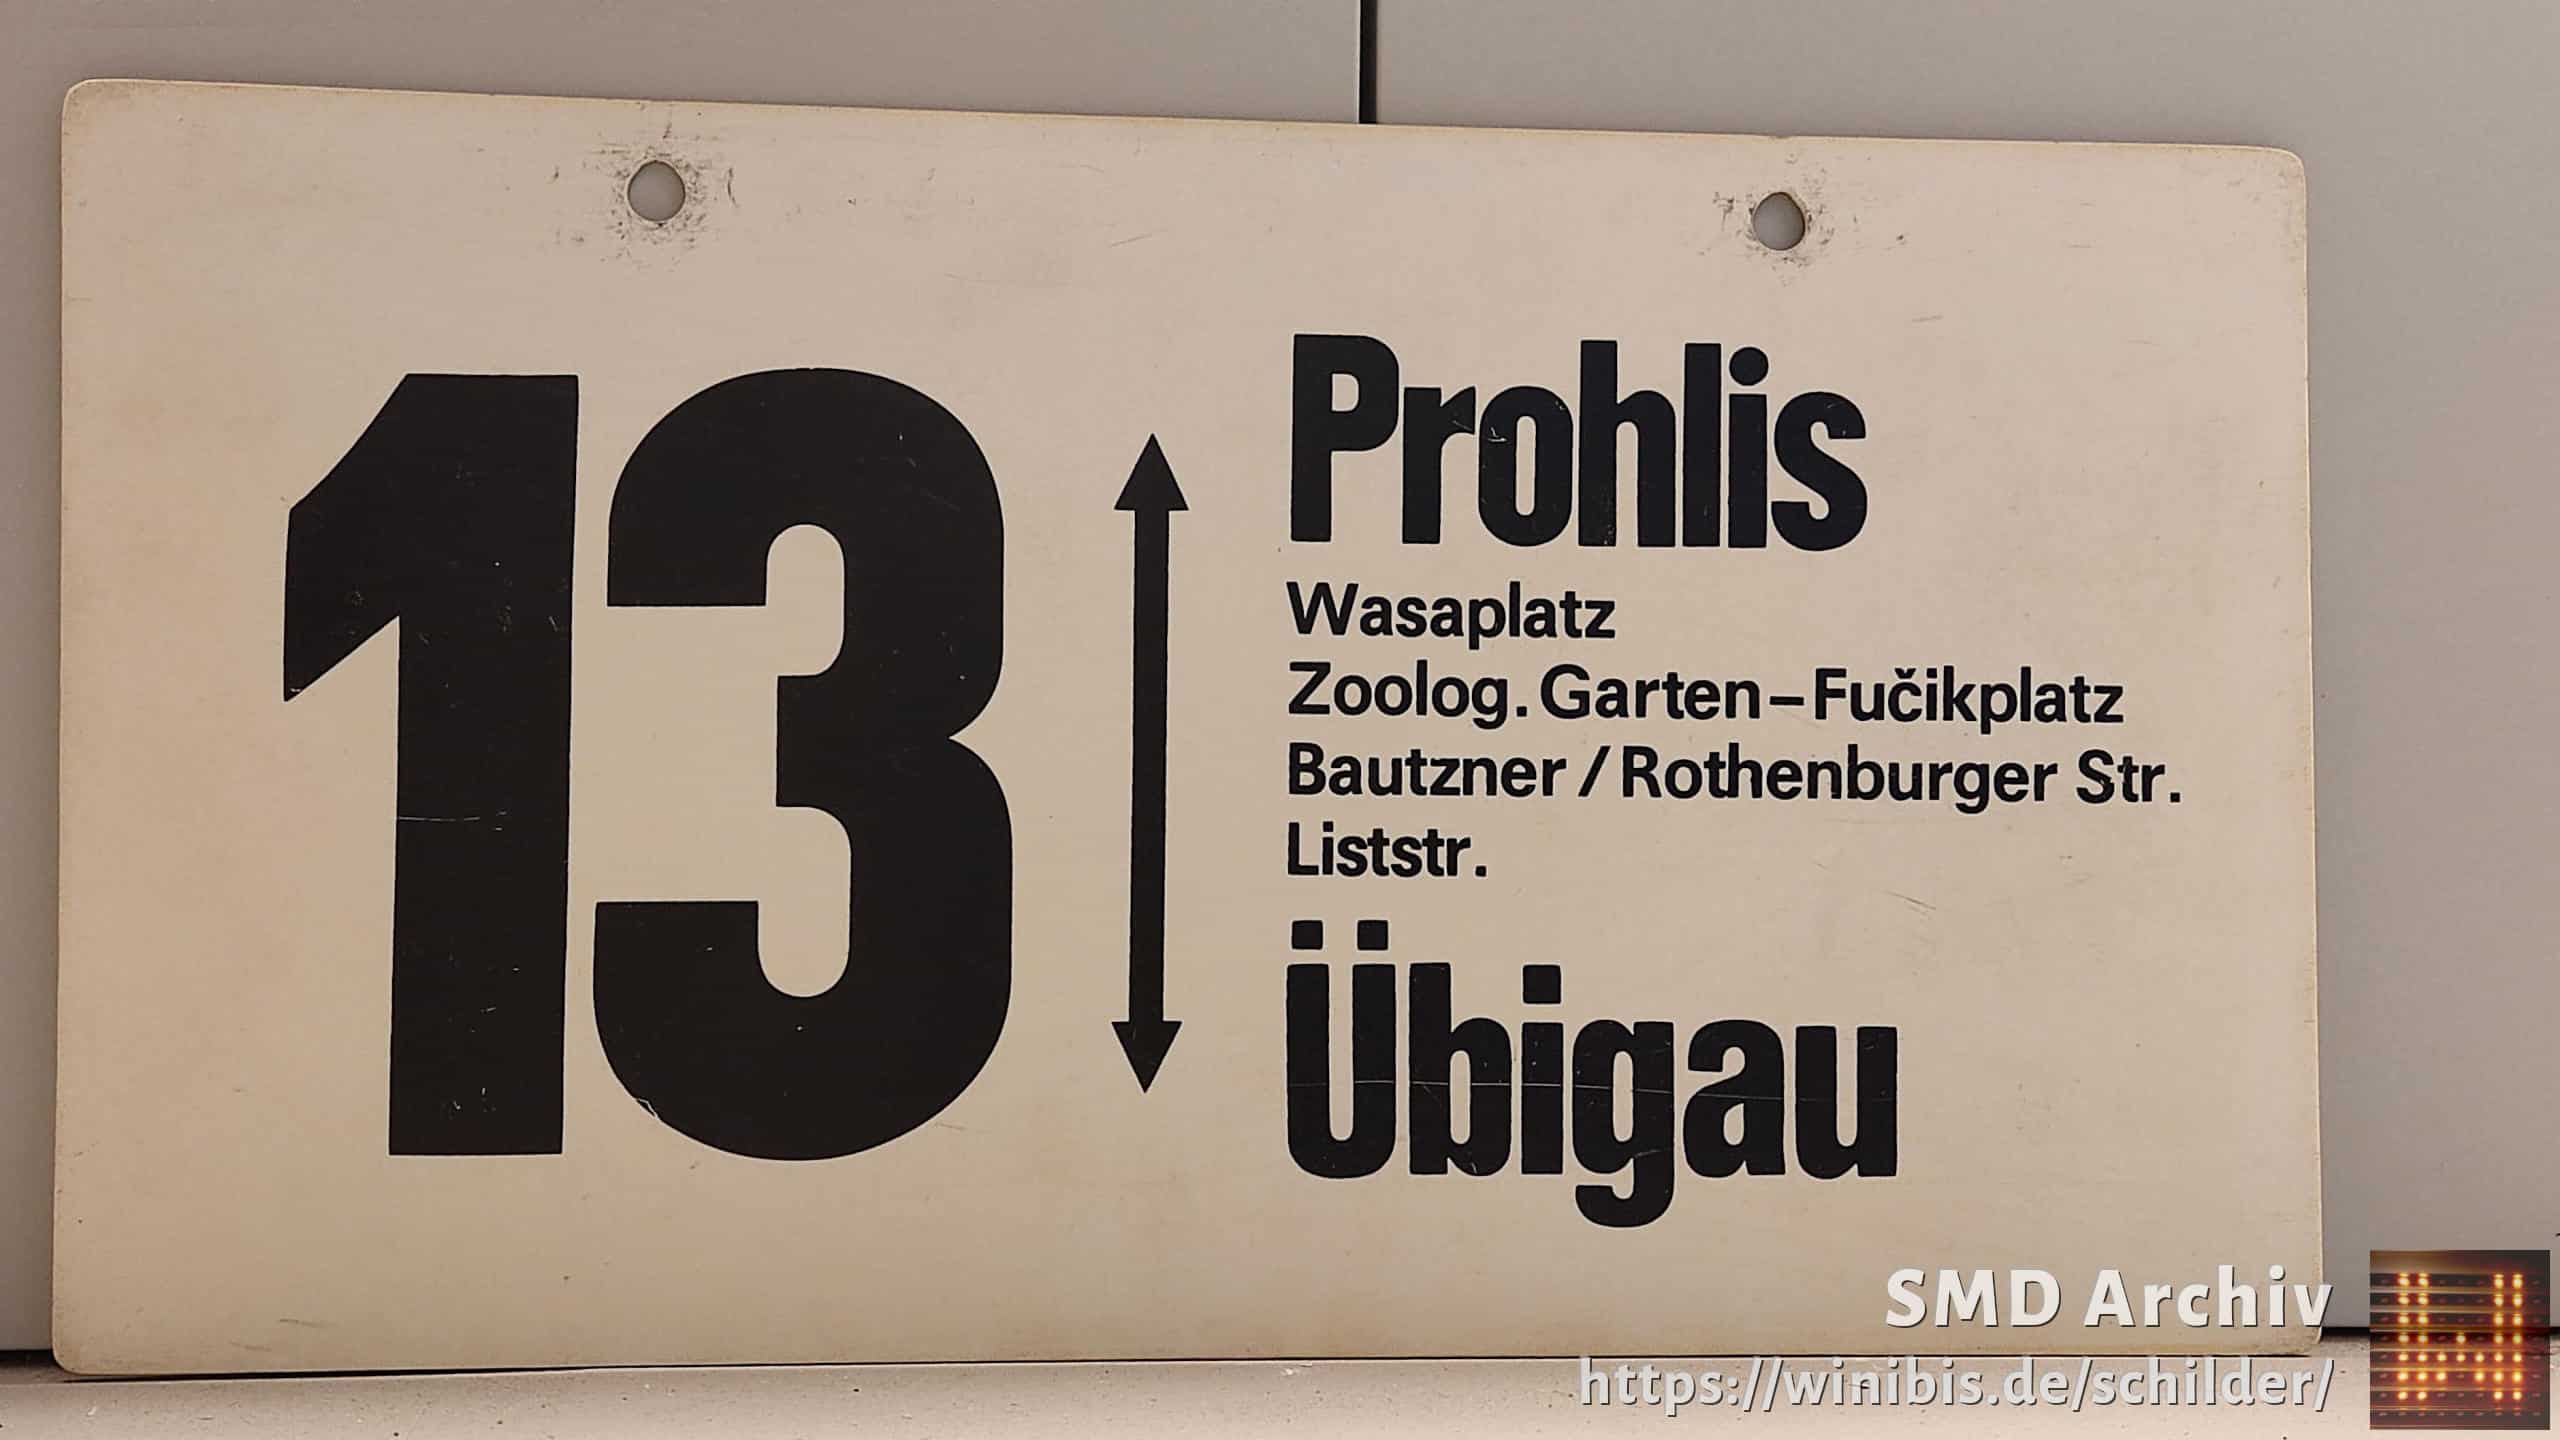 13 Prohlis – Übigau #1